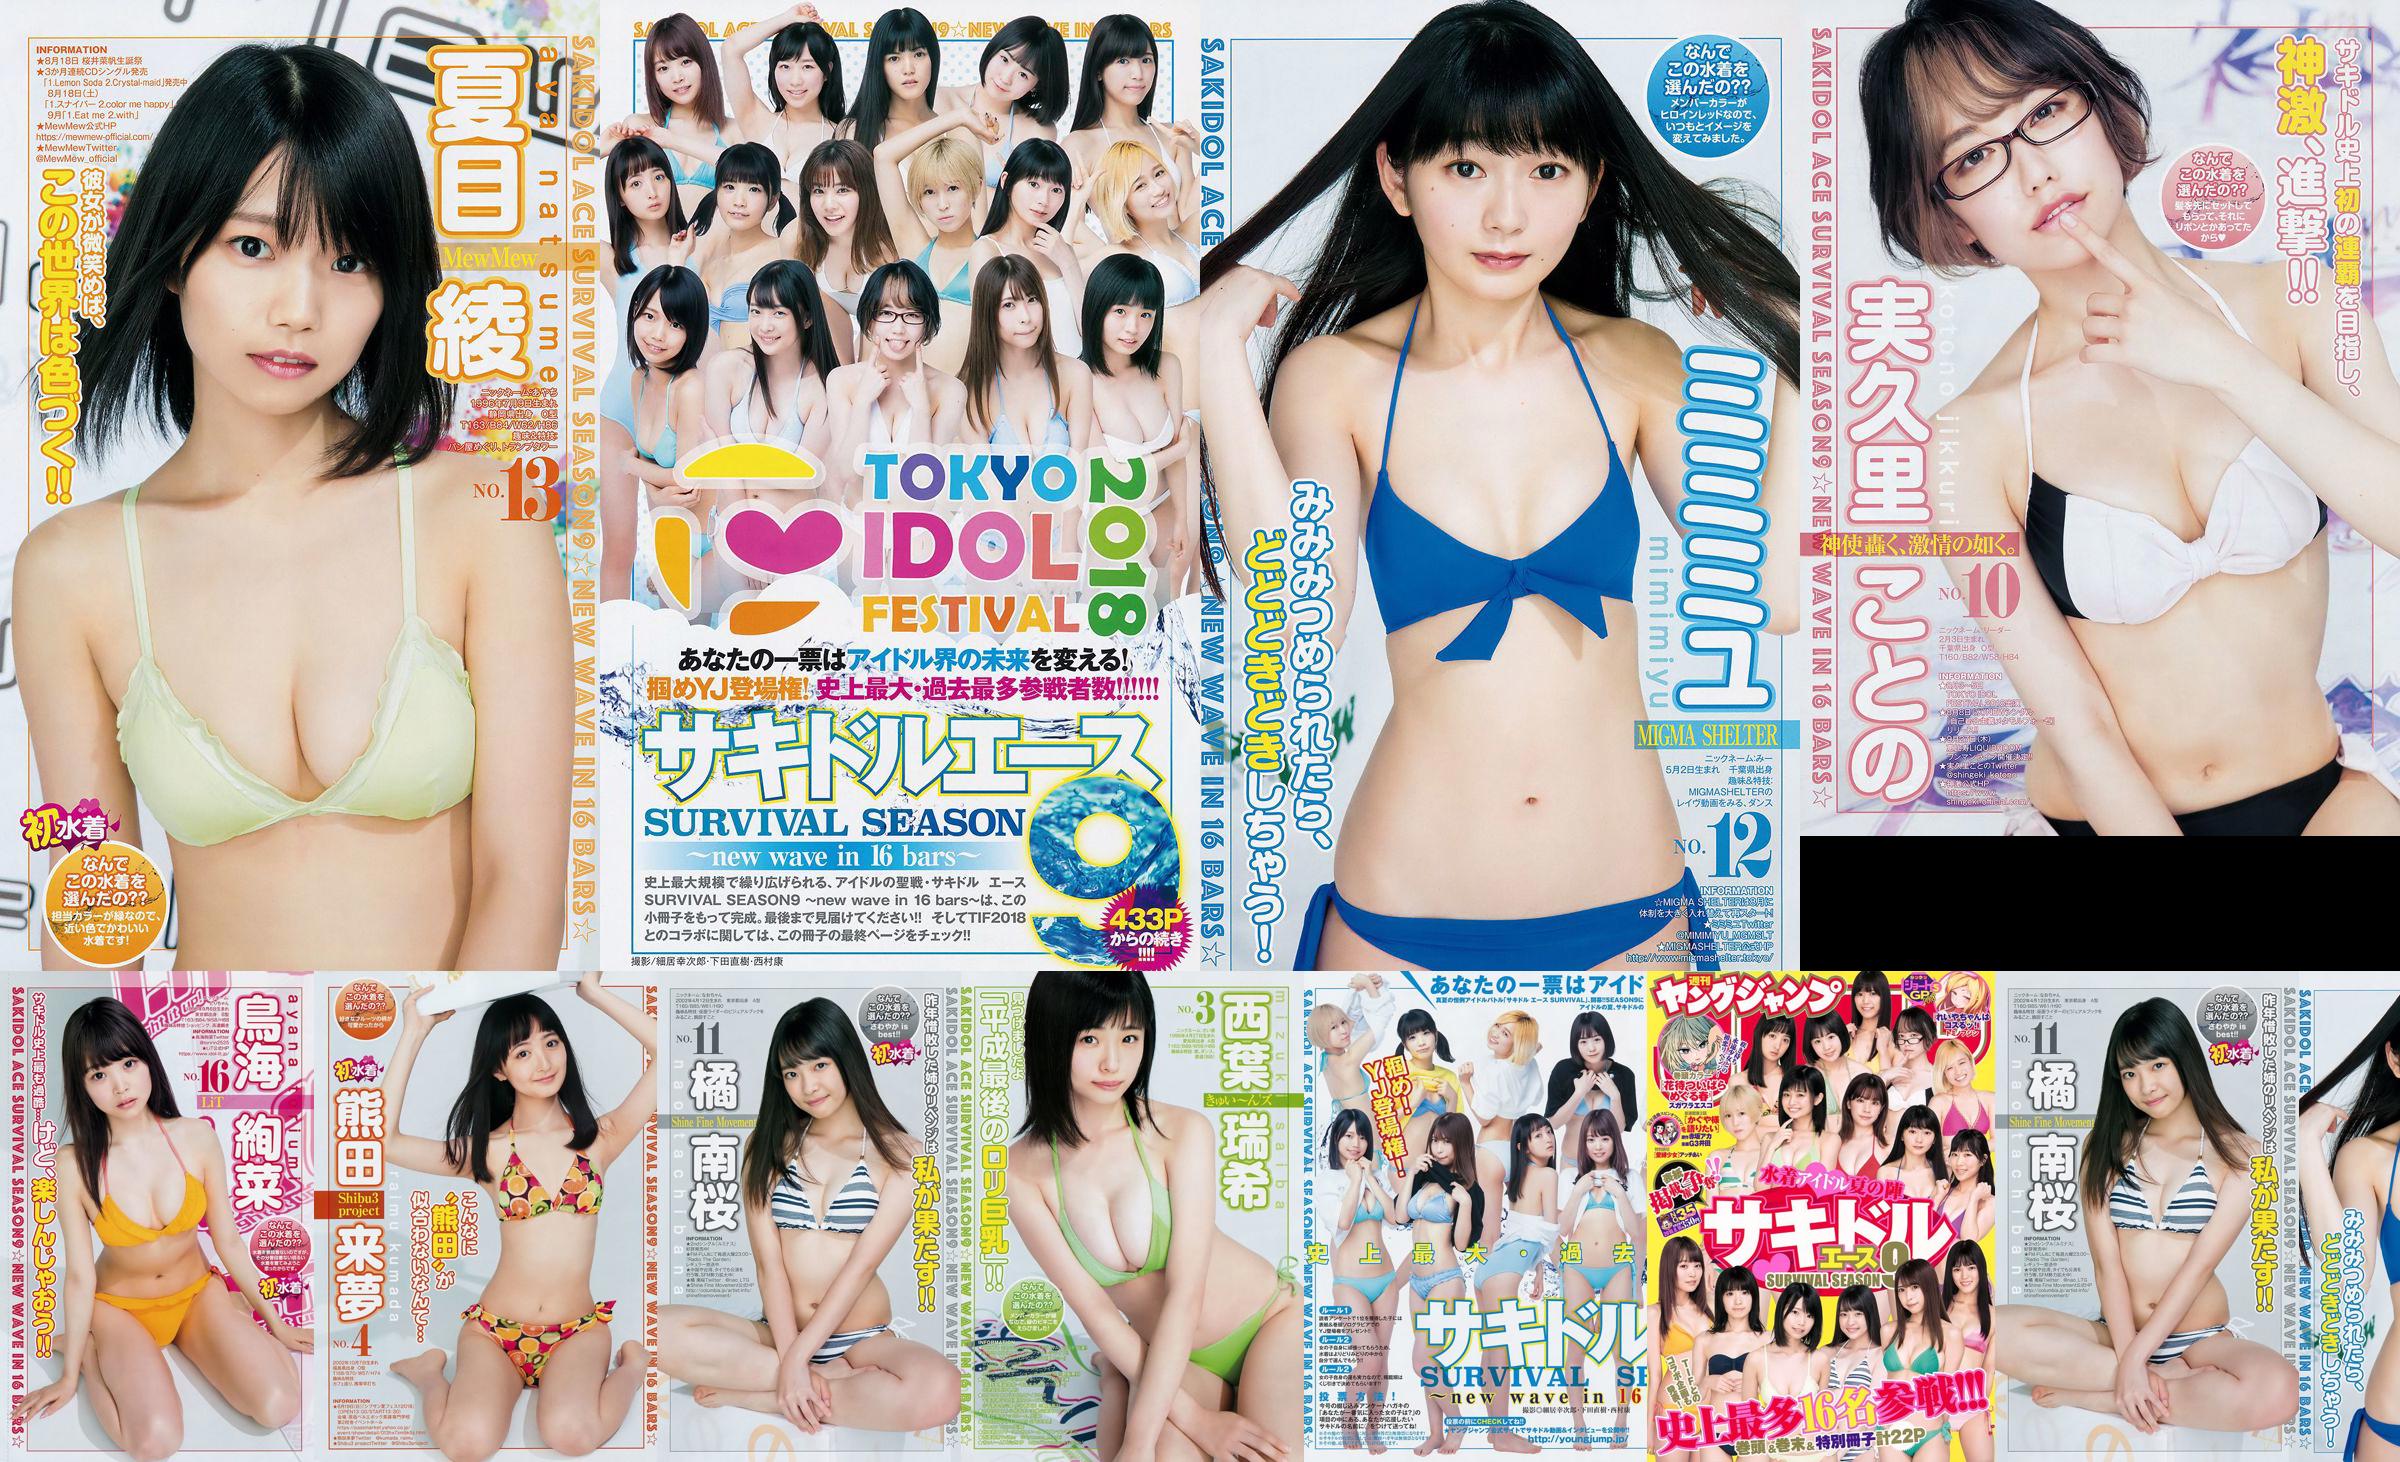 [FLASH] Ikumi Hisamatsu Risa Hirako Ren Ishikawa Angel Moe AKB48 Kaho Shibuya Misuzu Hayashi Ririka 2015.04.21 Photo Toshi No.124af9 Page 4